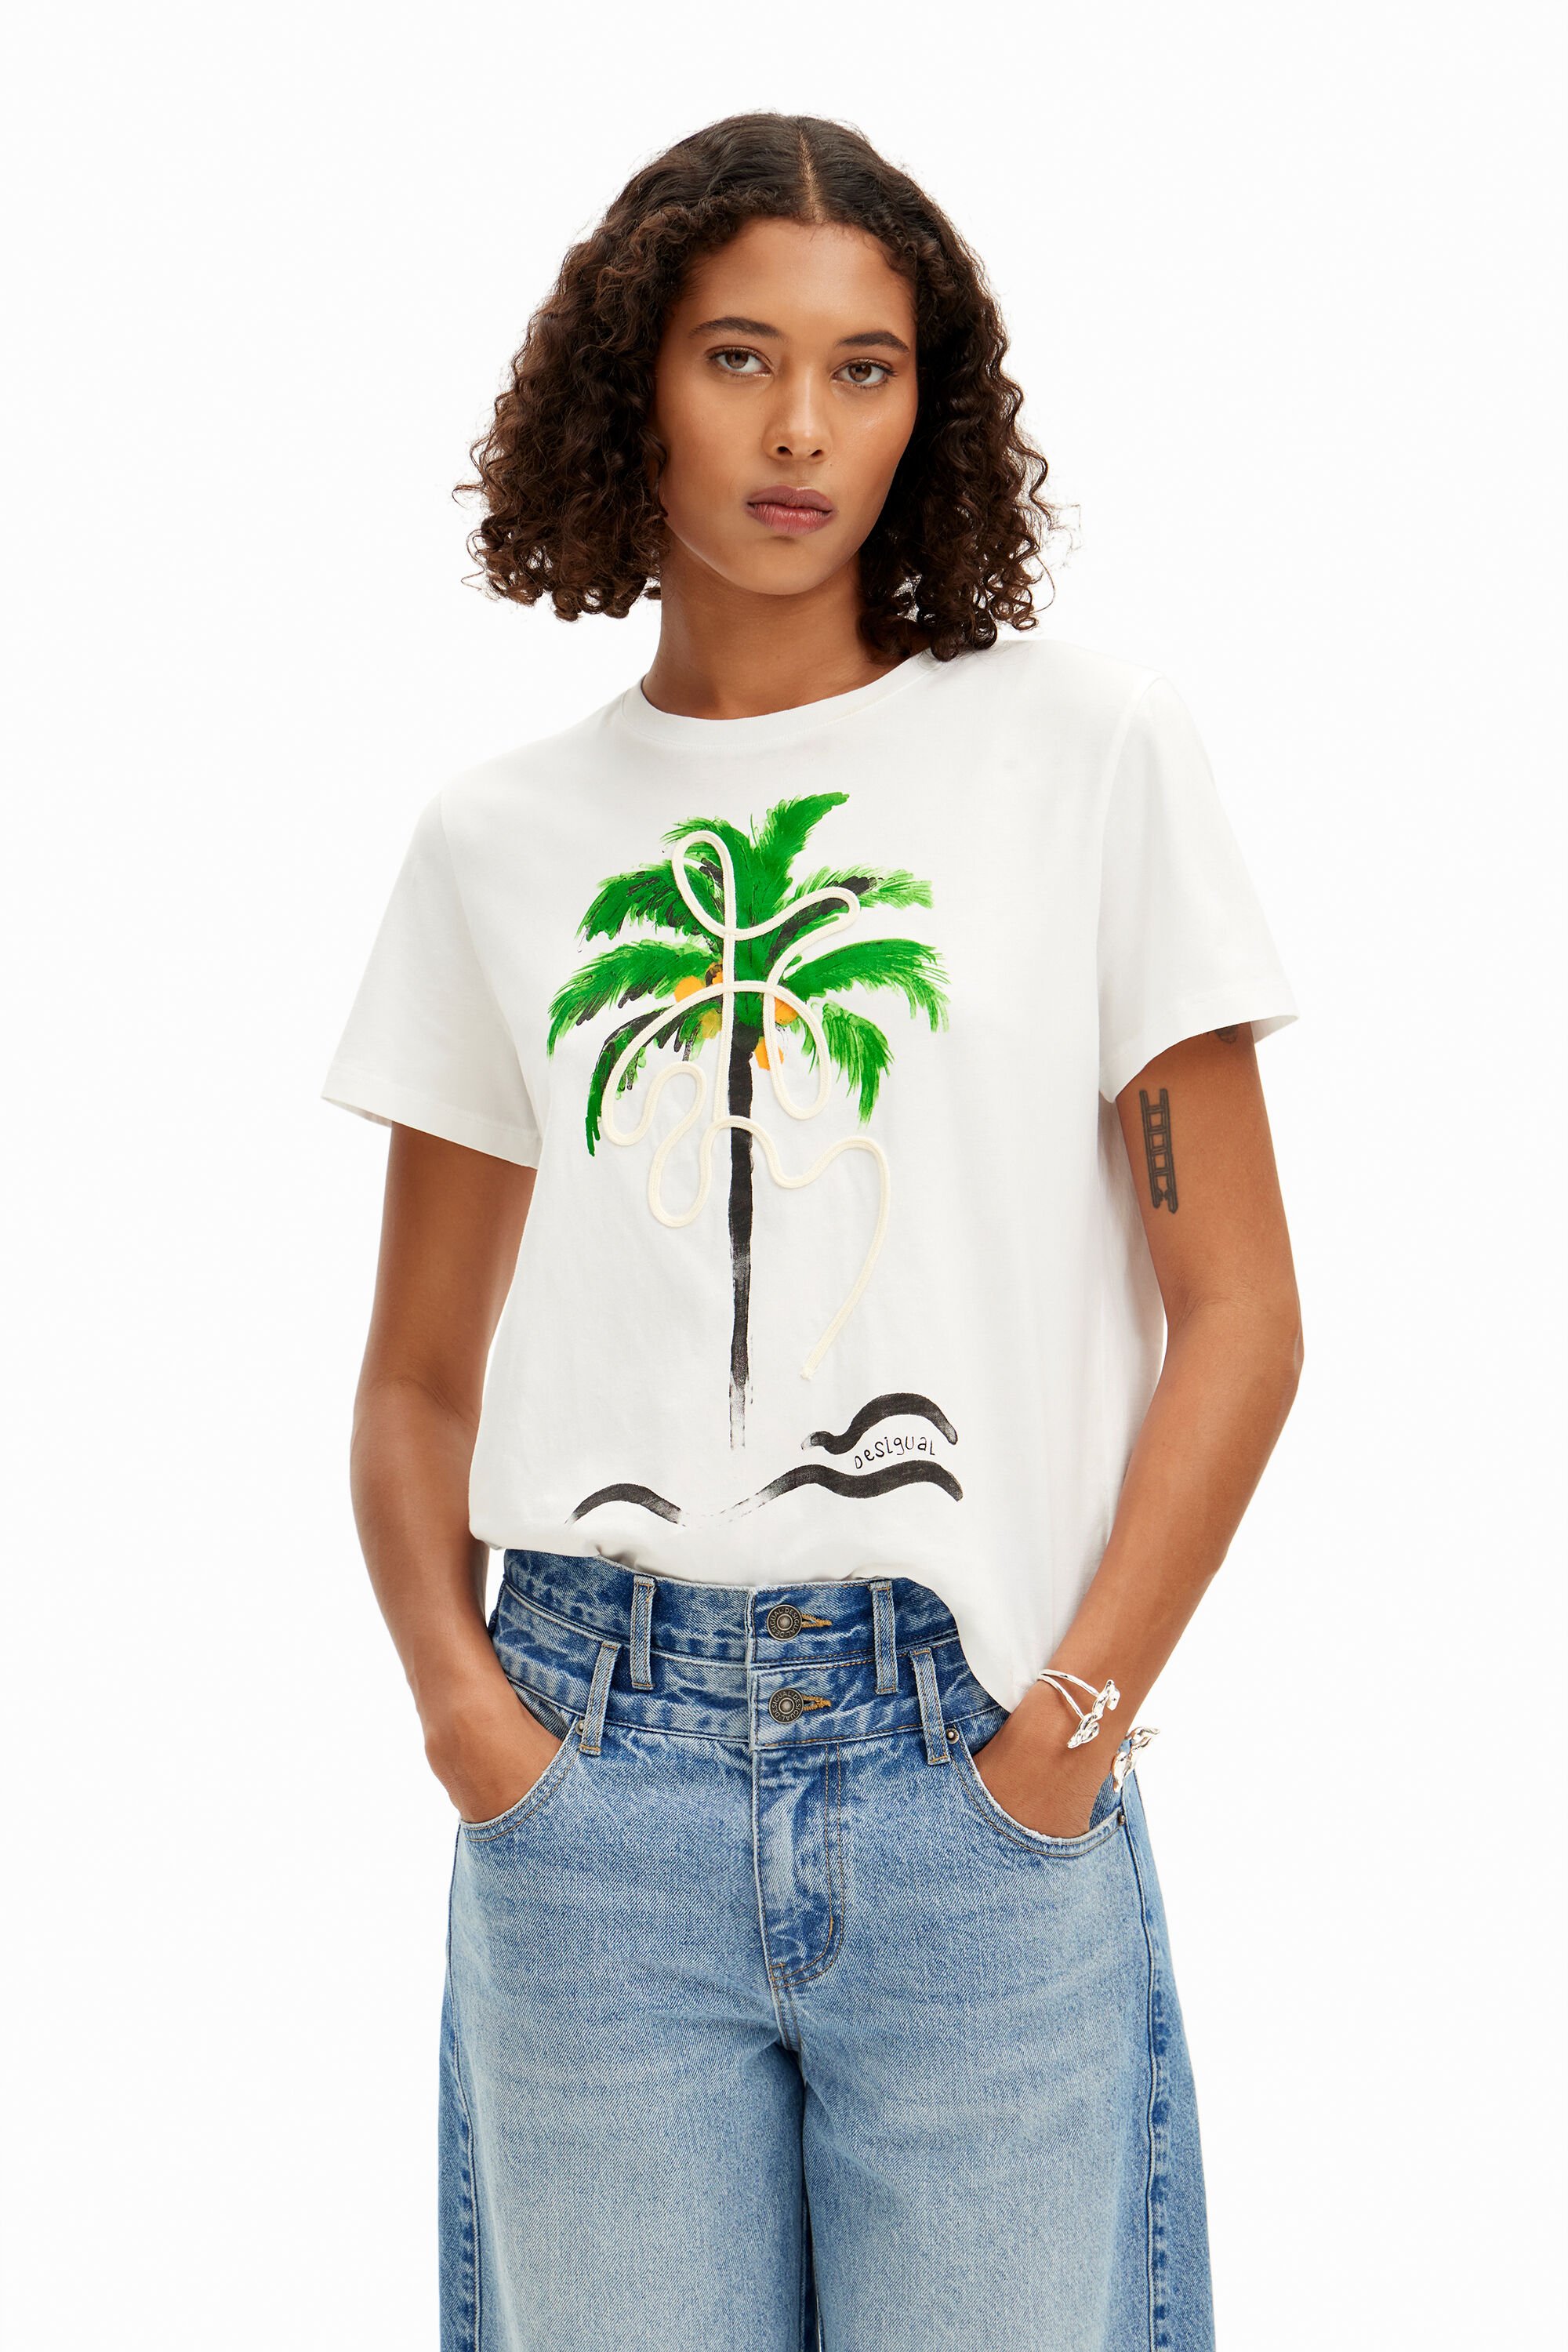 Desigual Hand-painted palm tree T-shirt